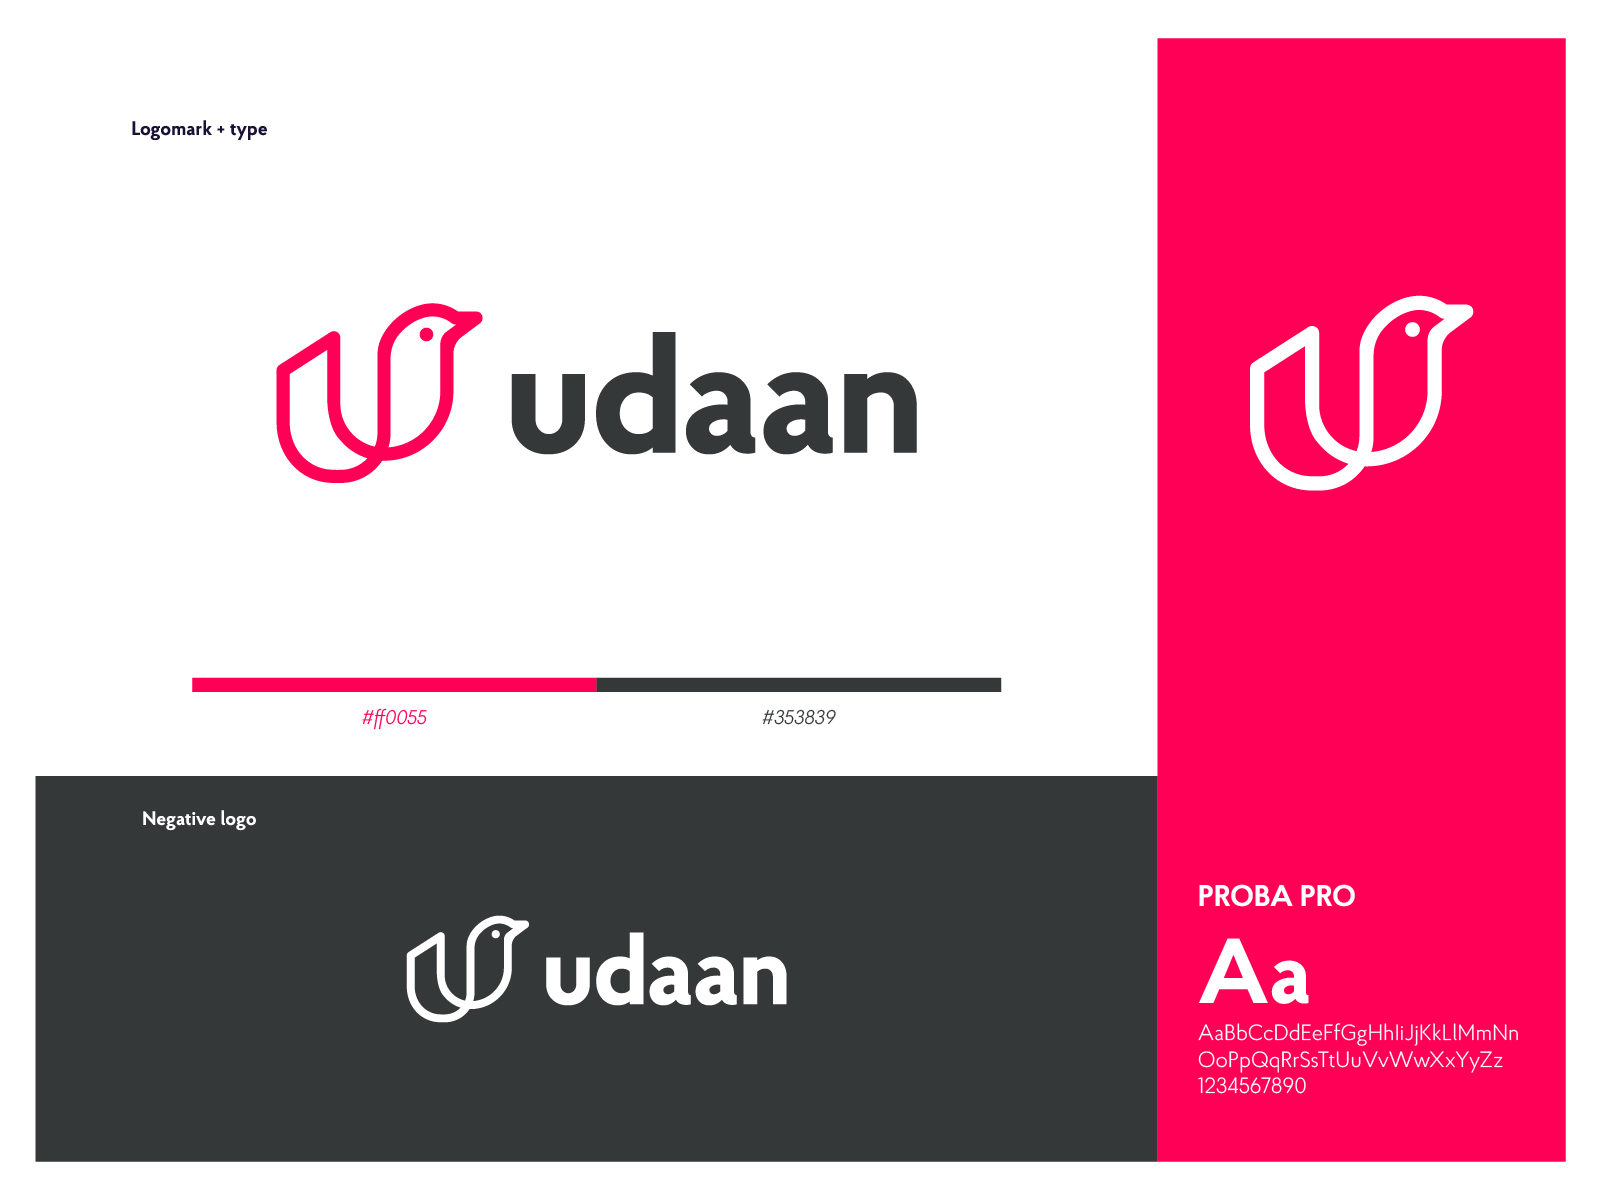 GraphicsStop - UDAAN Logo! . . Udaan is an NGO in India... | Facebook